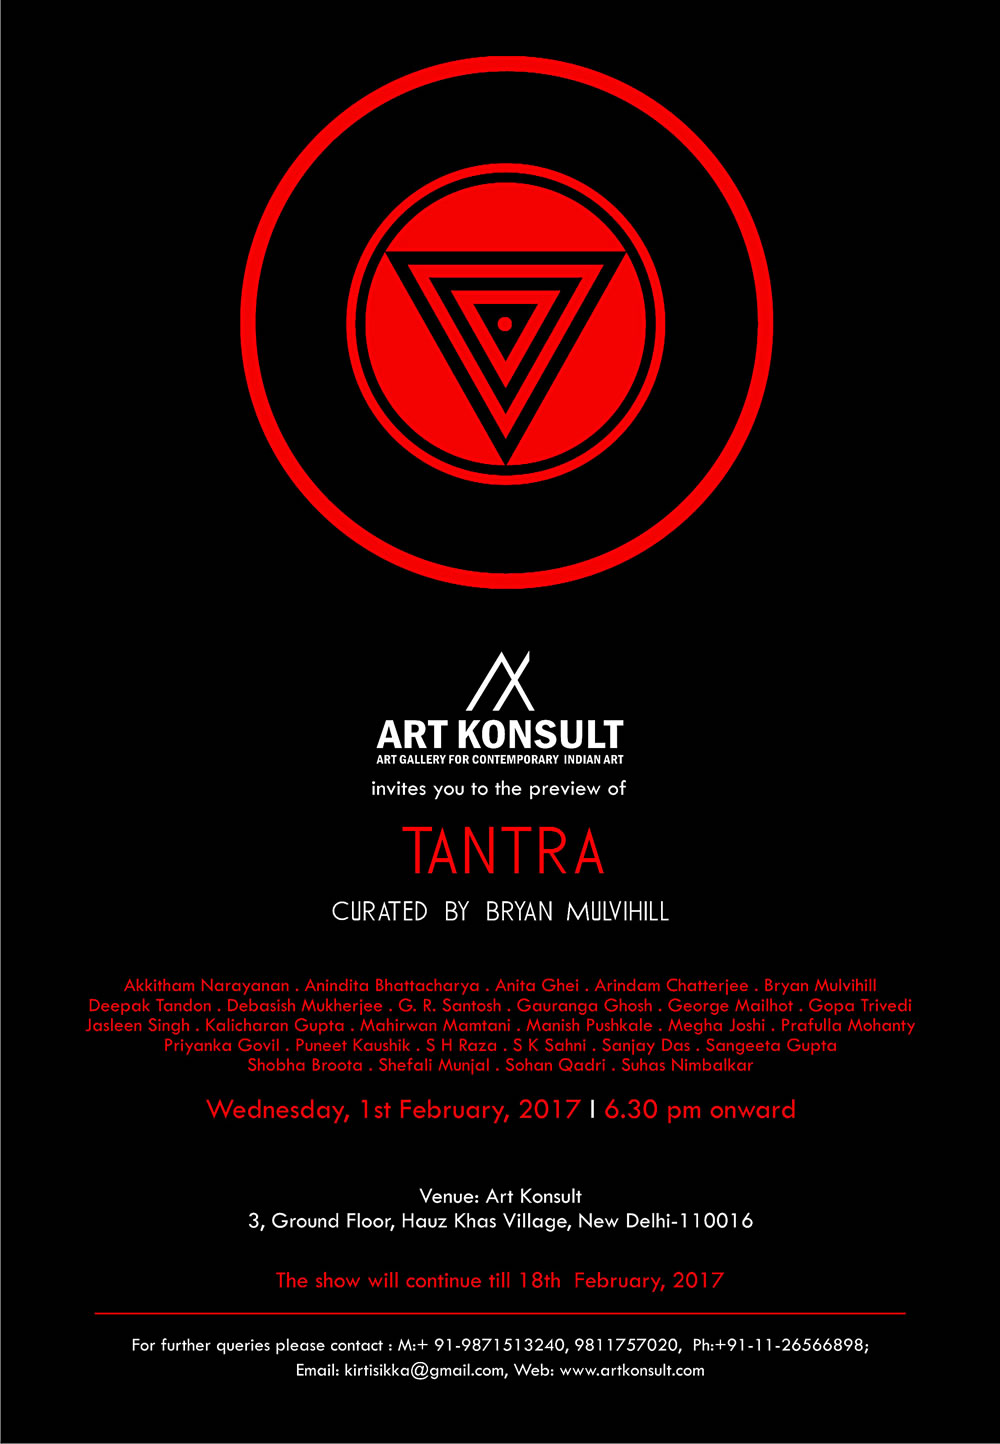 http://artkonsult.com/new/wp-content/uploads/2015/12/tantra.jpg